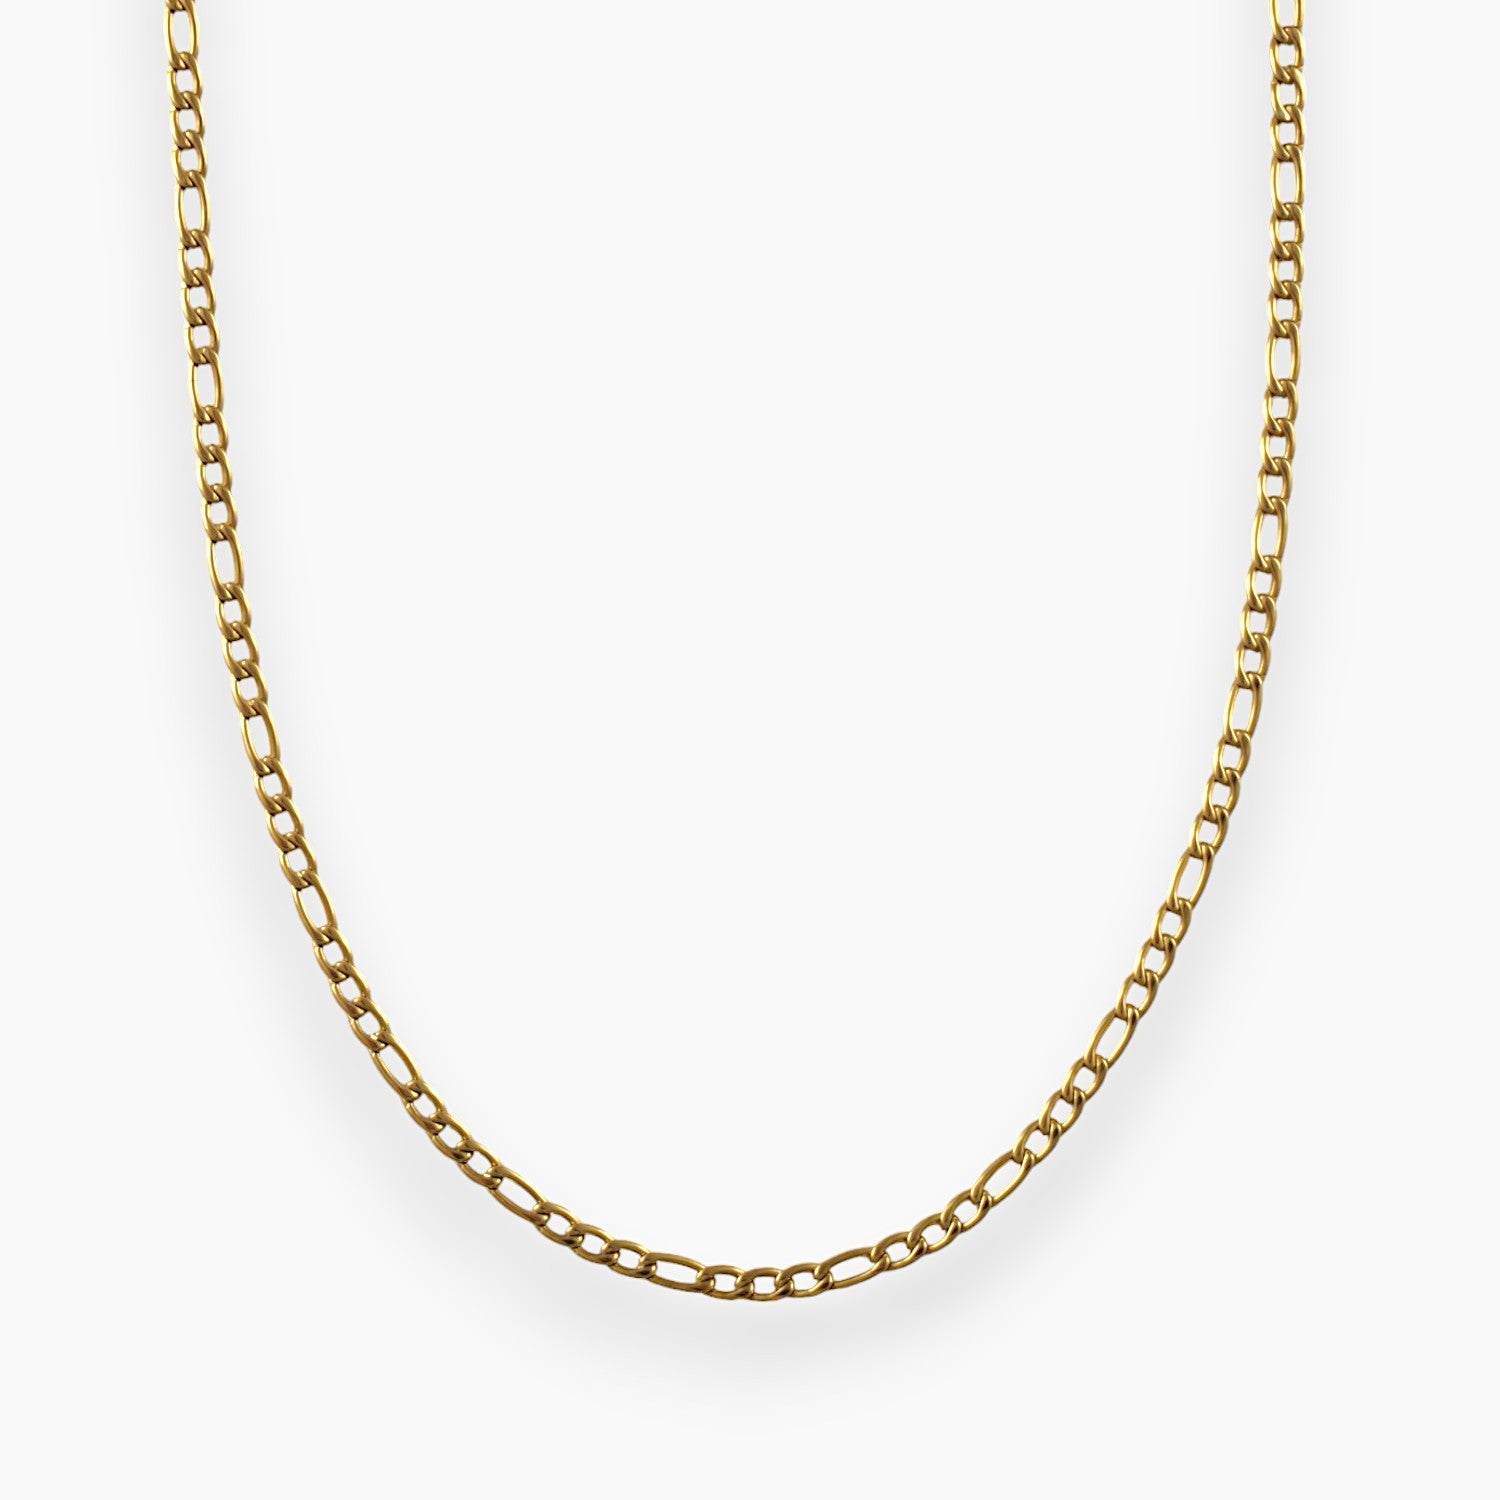 3mm gold figaro chain